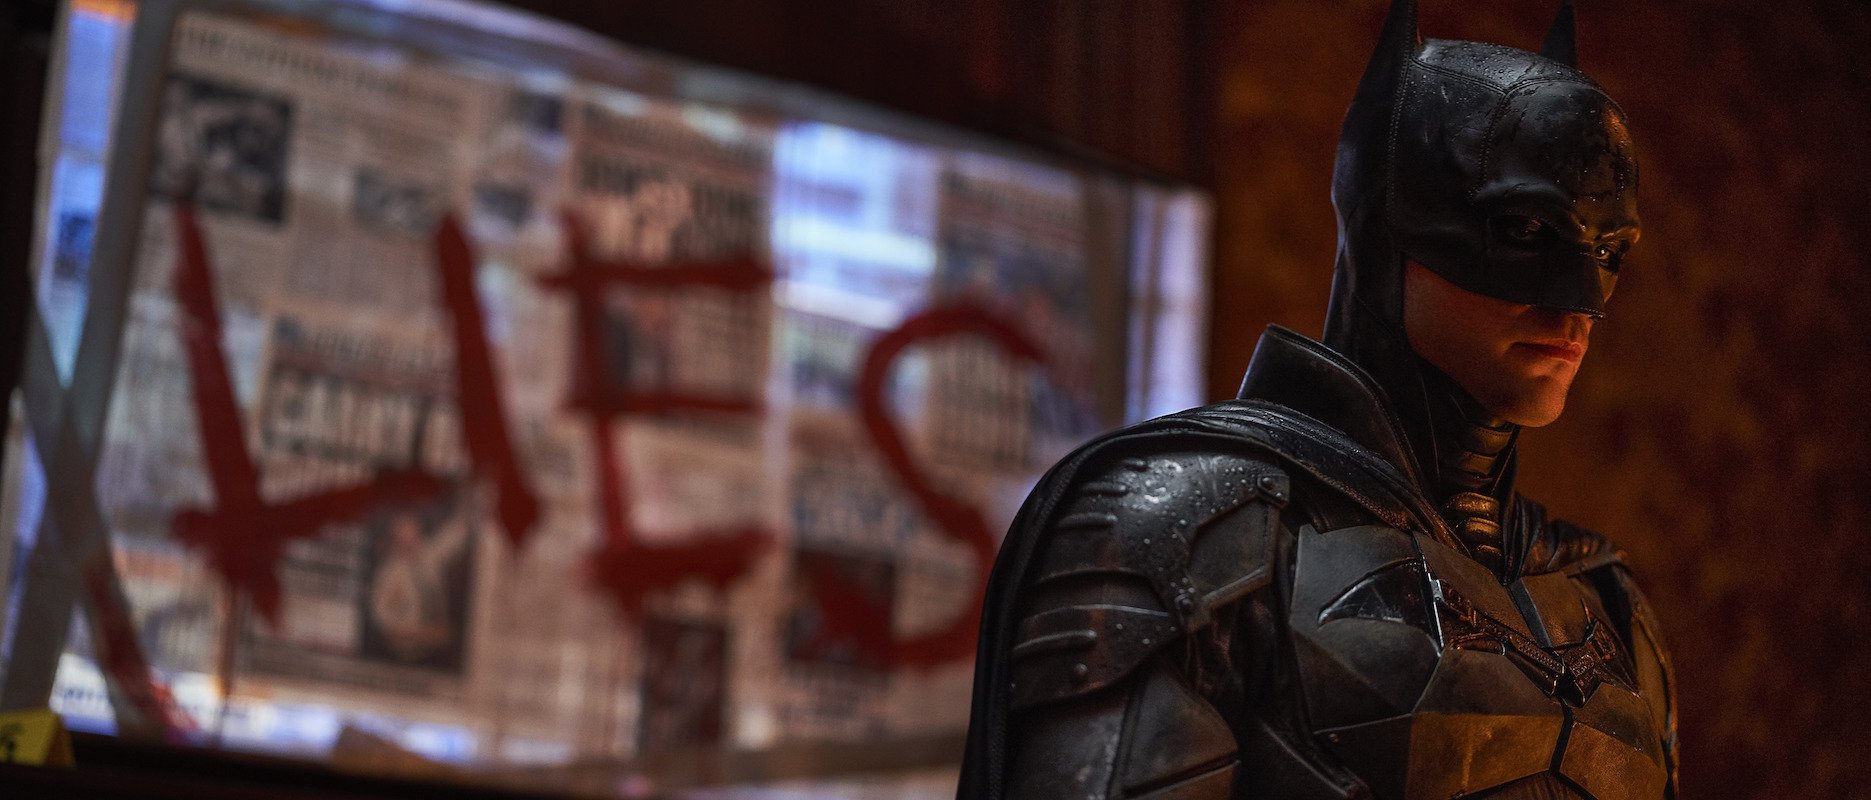 'The Batman': Robert Pattinson's Batman reads Riddler clues, and meets The Joker in a deleted scene